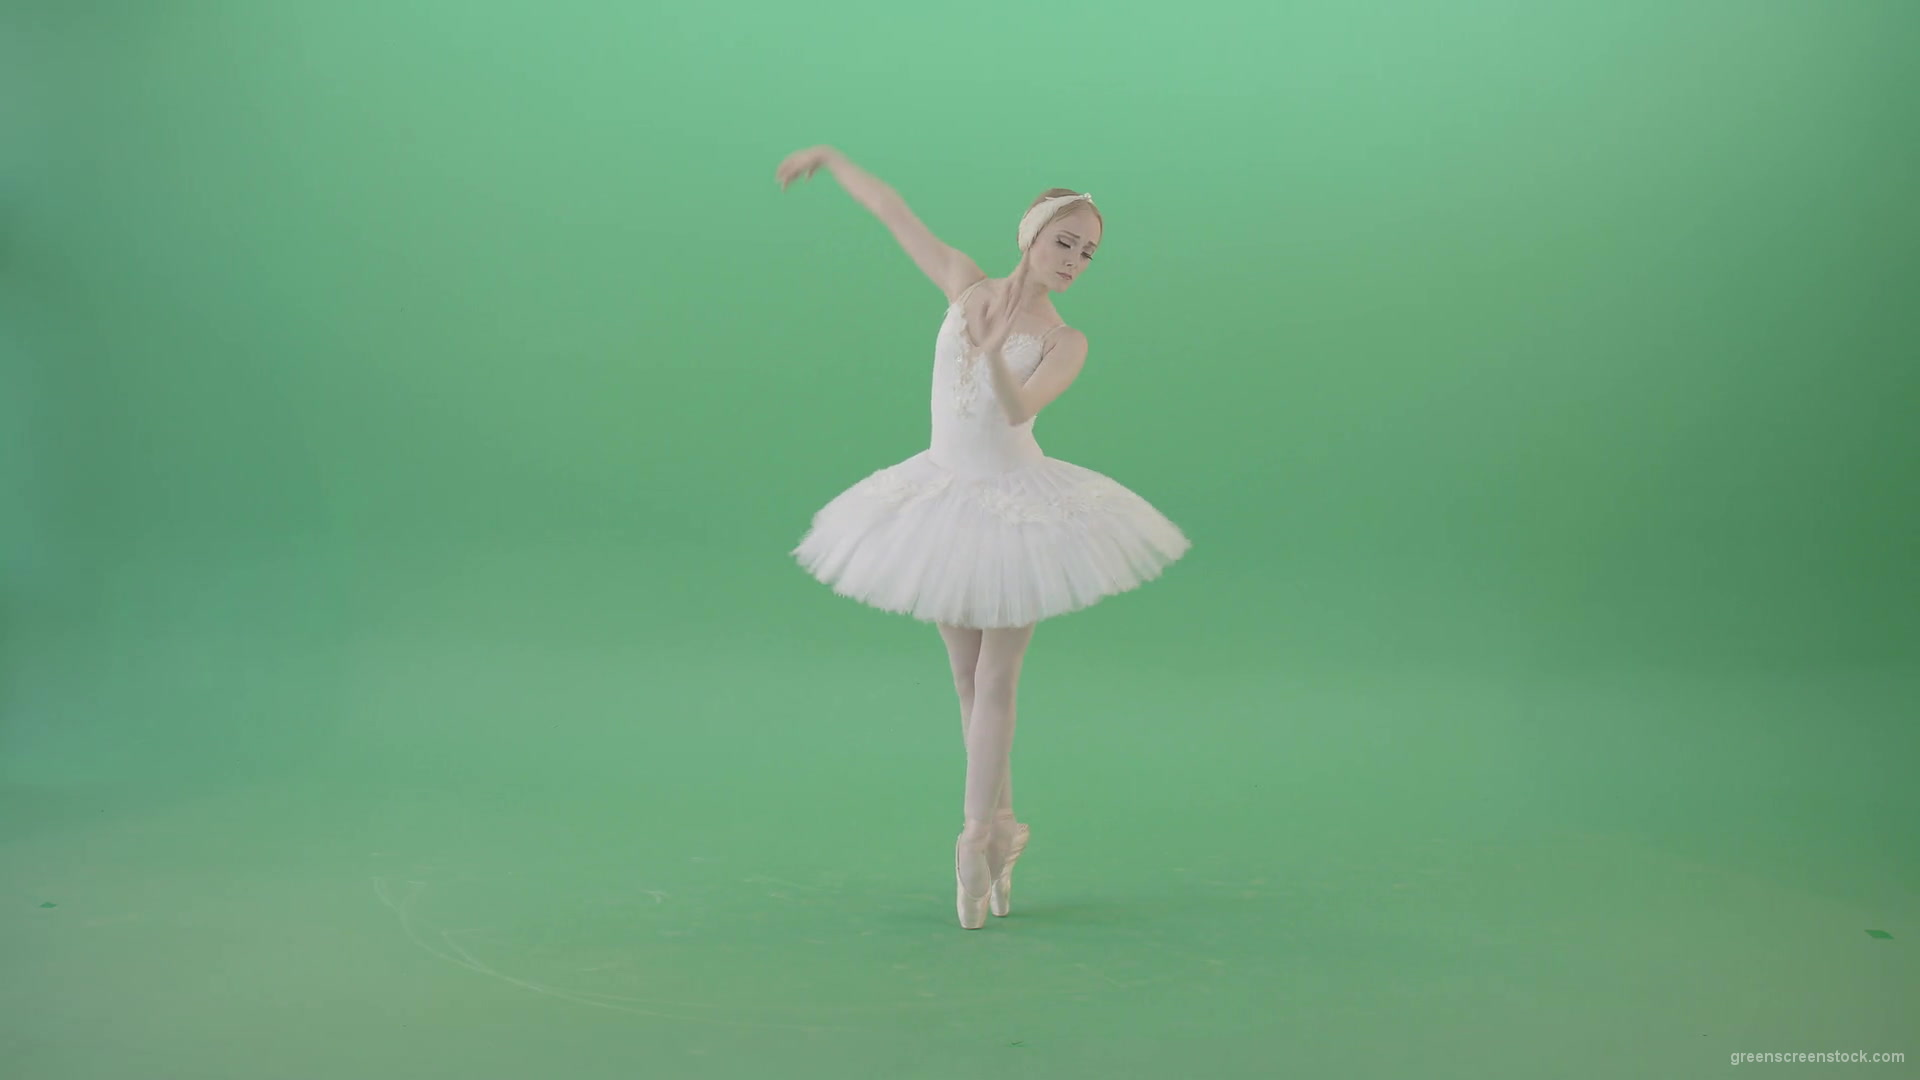 Grace-Ballerina-dance-classical-ballet-art-in-white-costume-on-green-screen-4K-Video-Footage-1920_002 Green Screen Stock